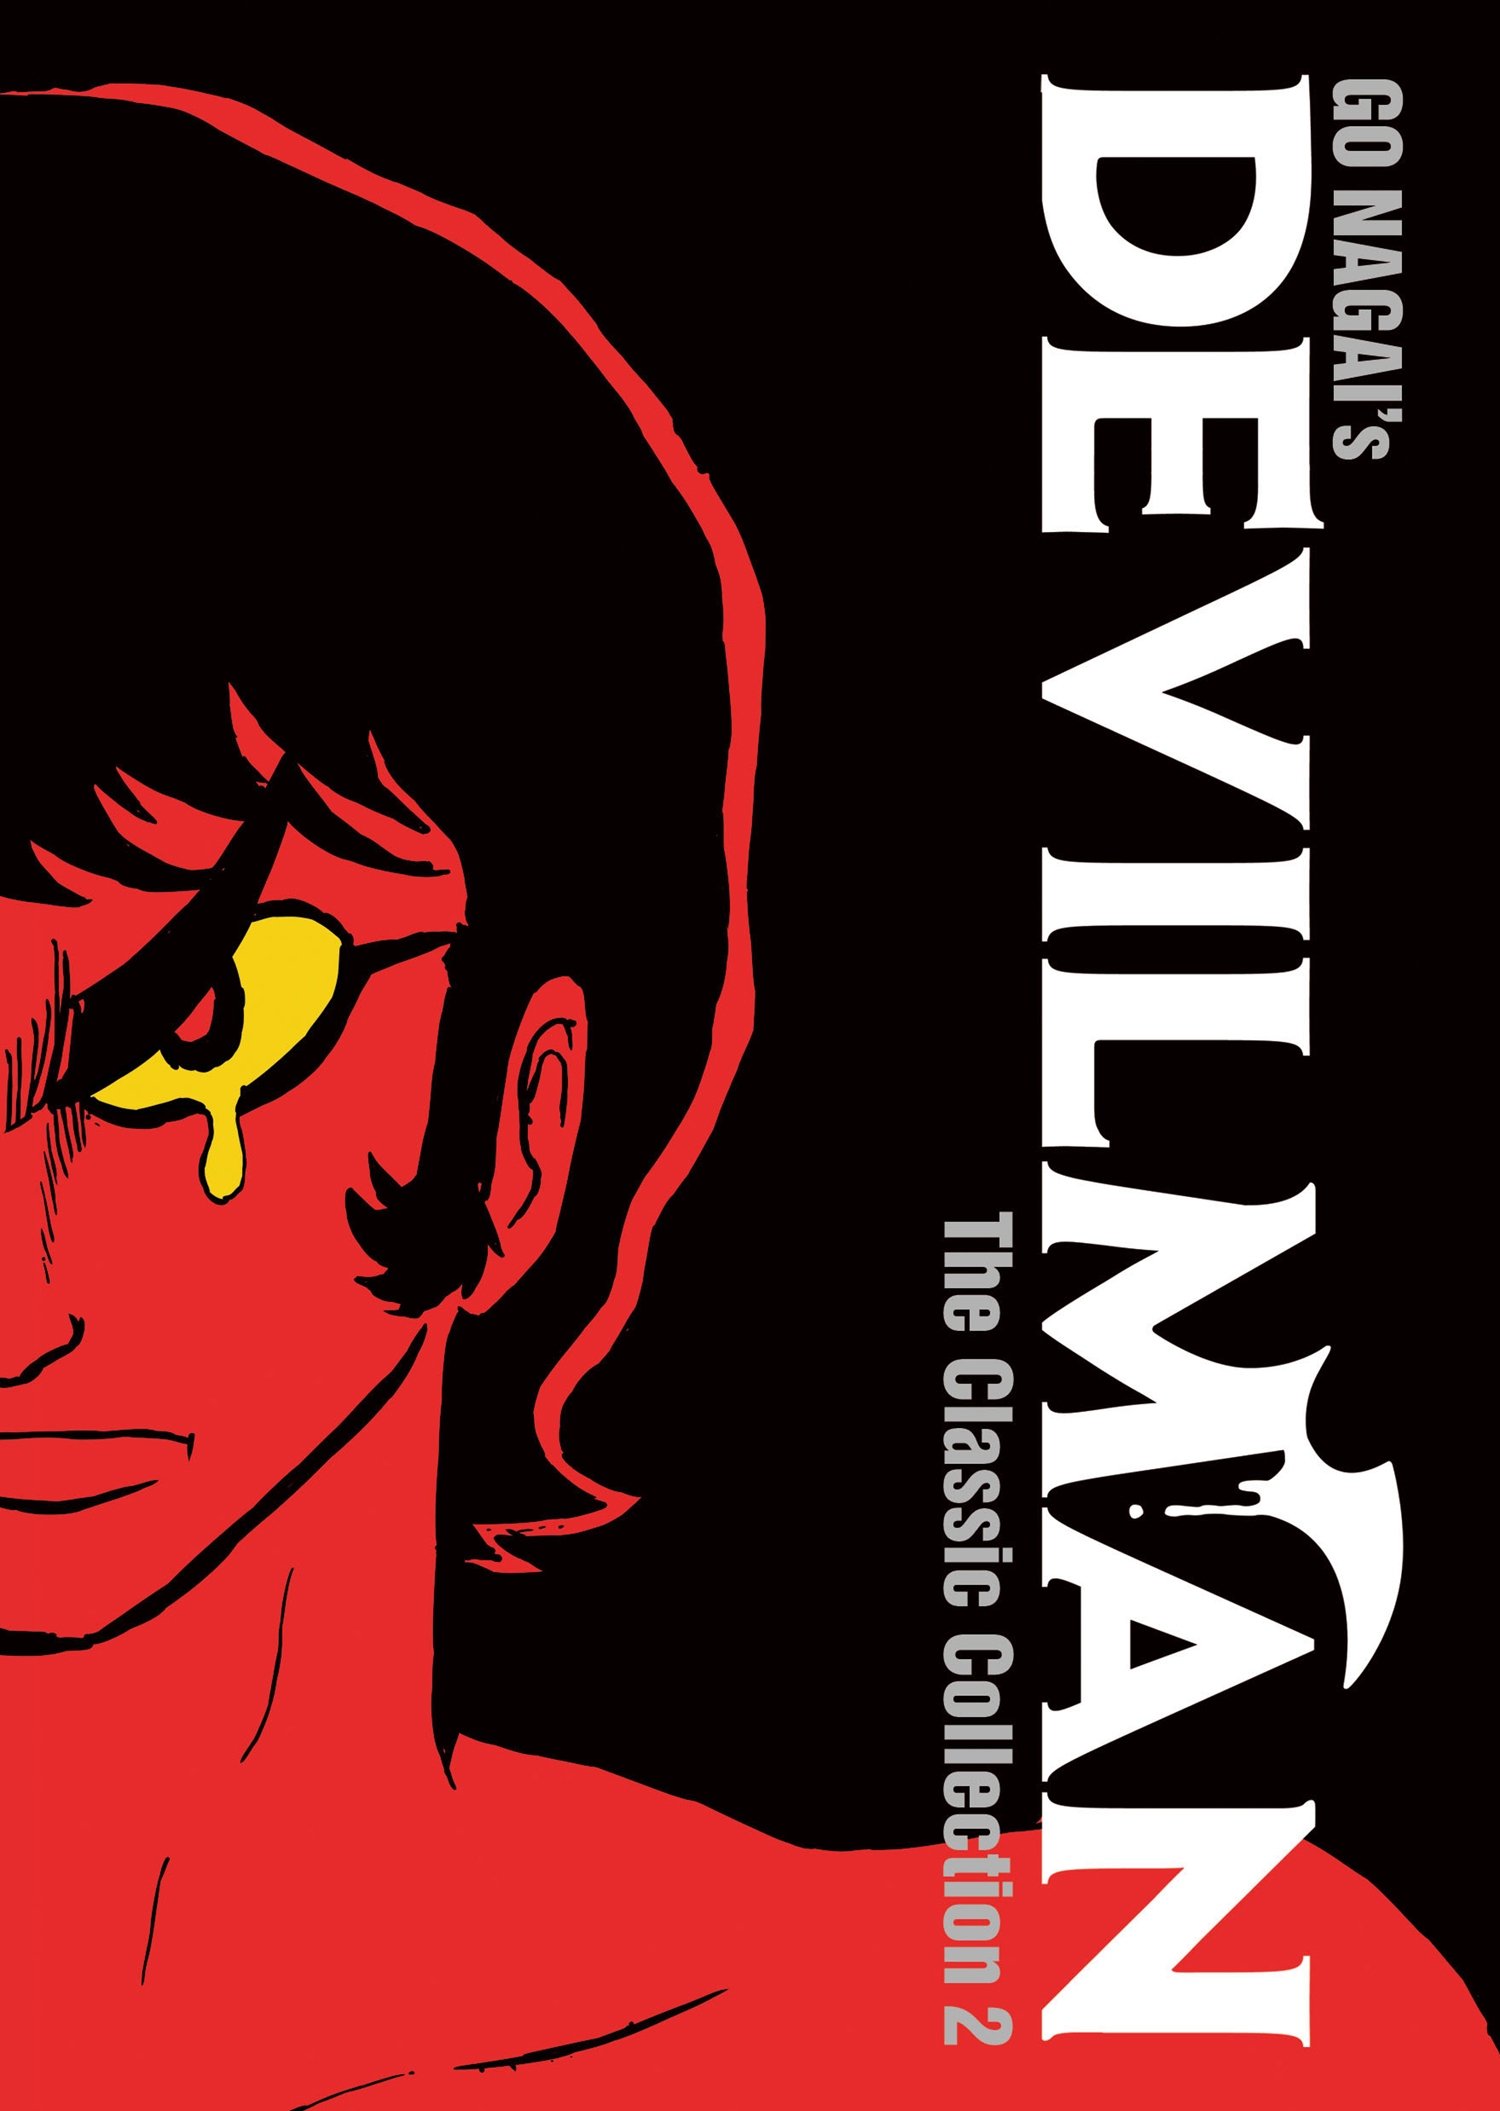 Devilman: The Classic Collection vol 2 h/c